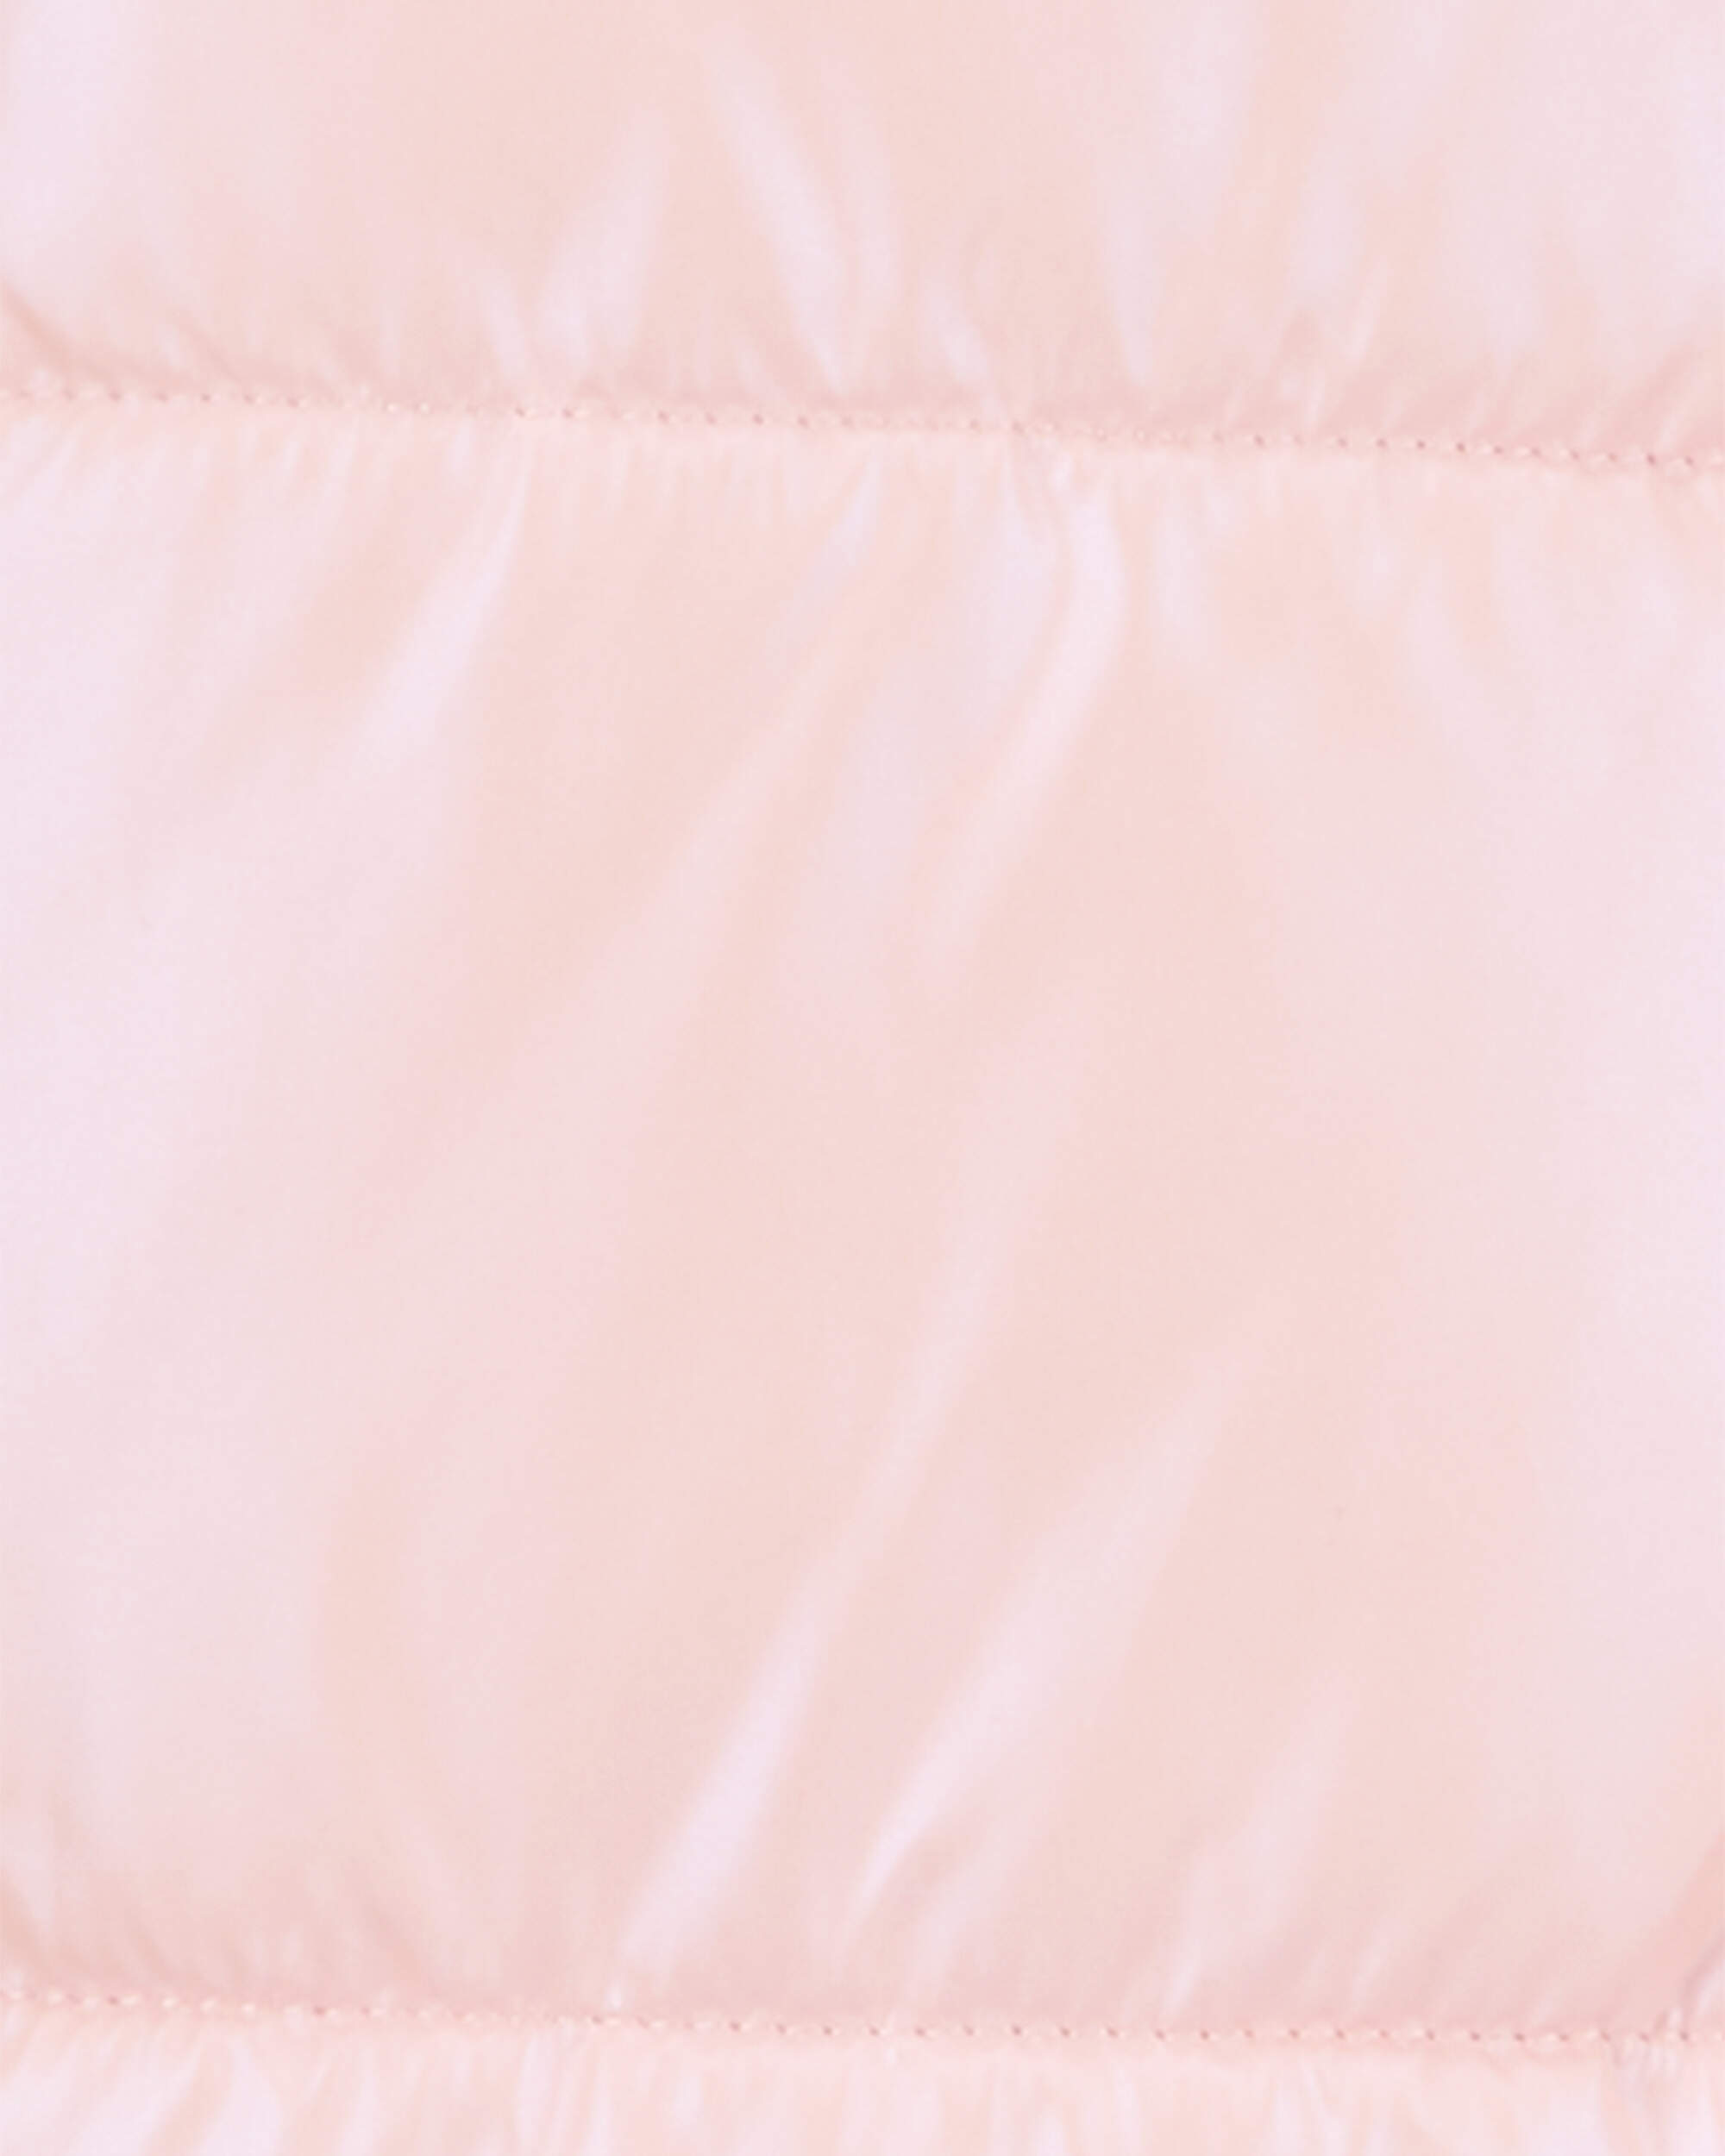 Baby 1-Piece Pink Snowsuit